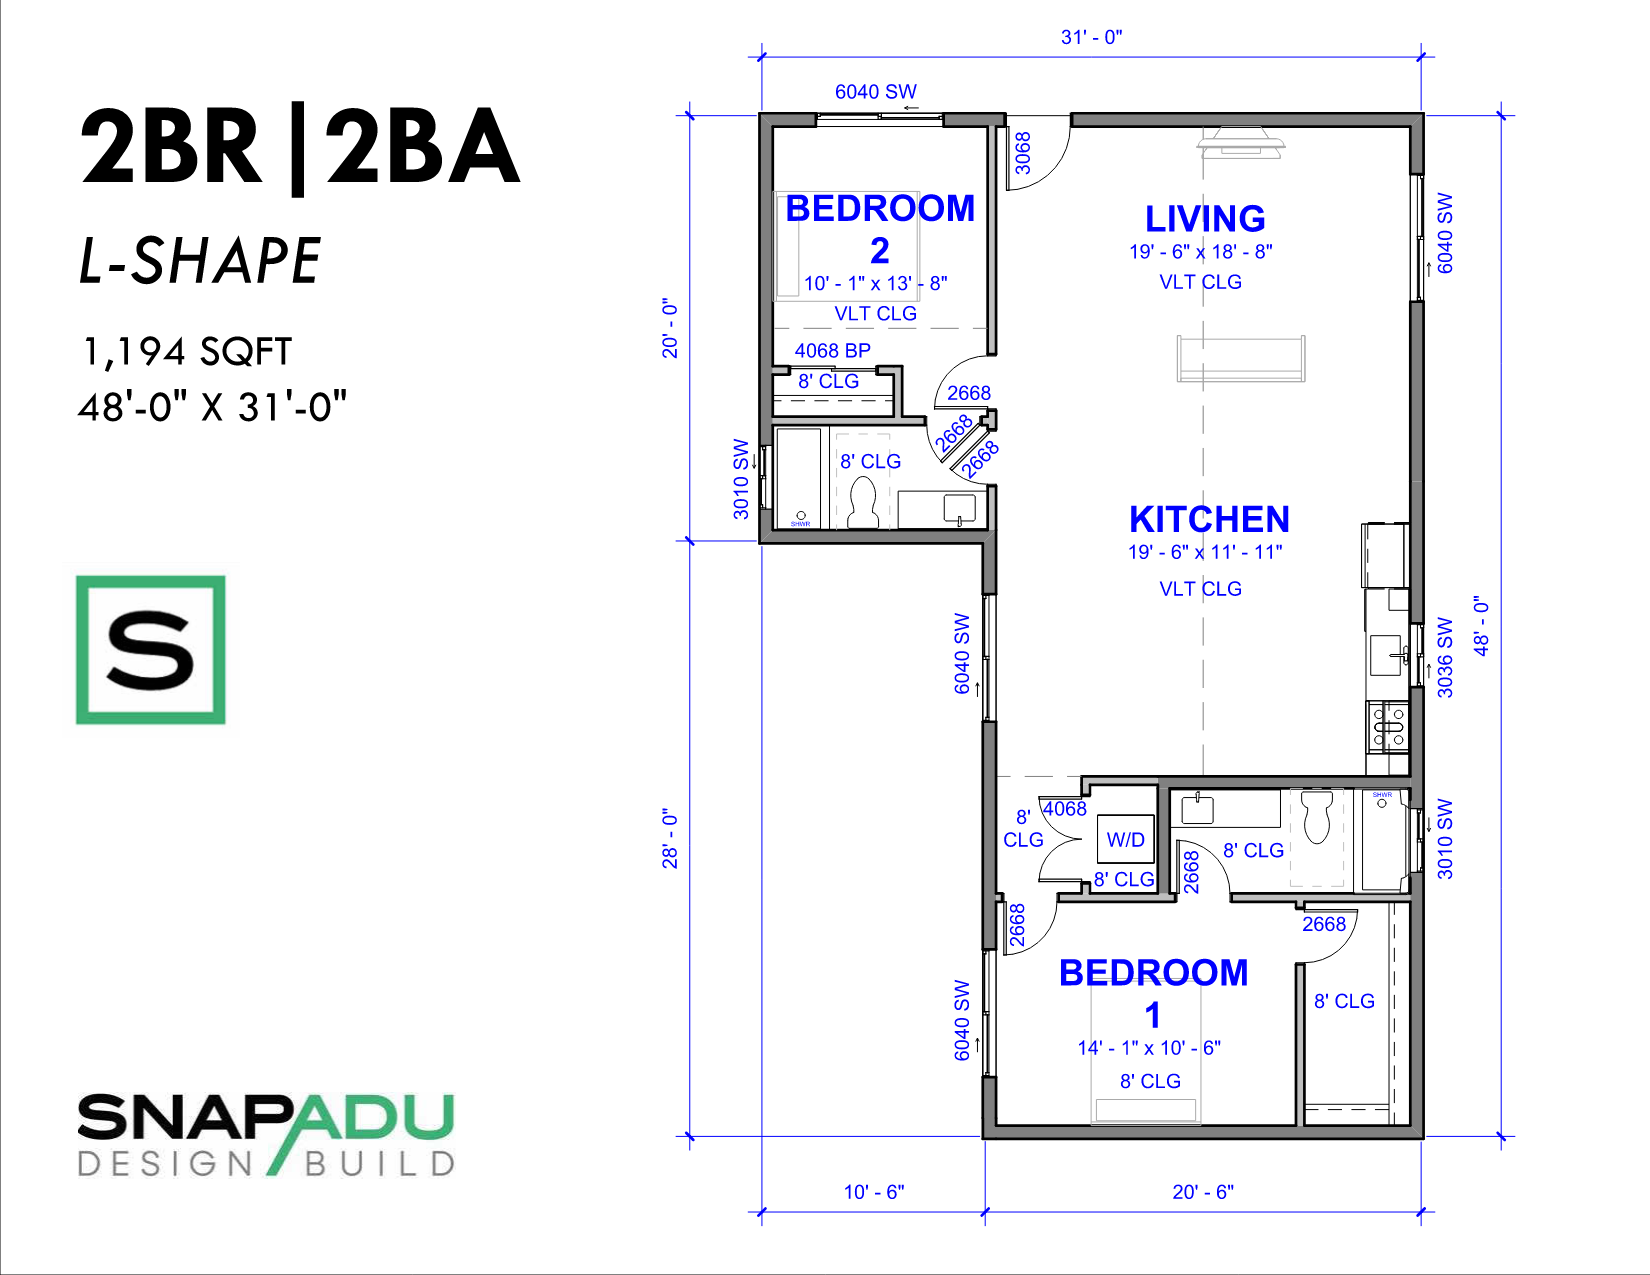 ADU Floor Plan 2BR 2BA Under 1200 sqft L-Shape 48x31